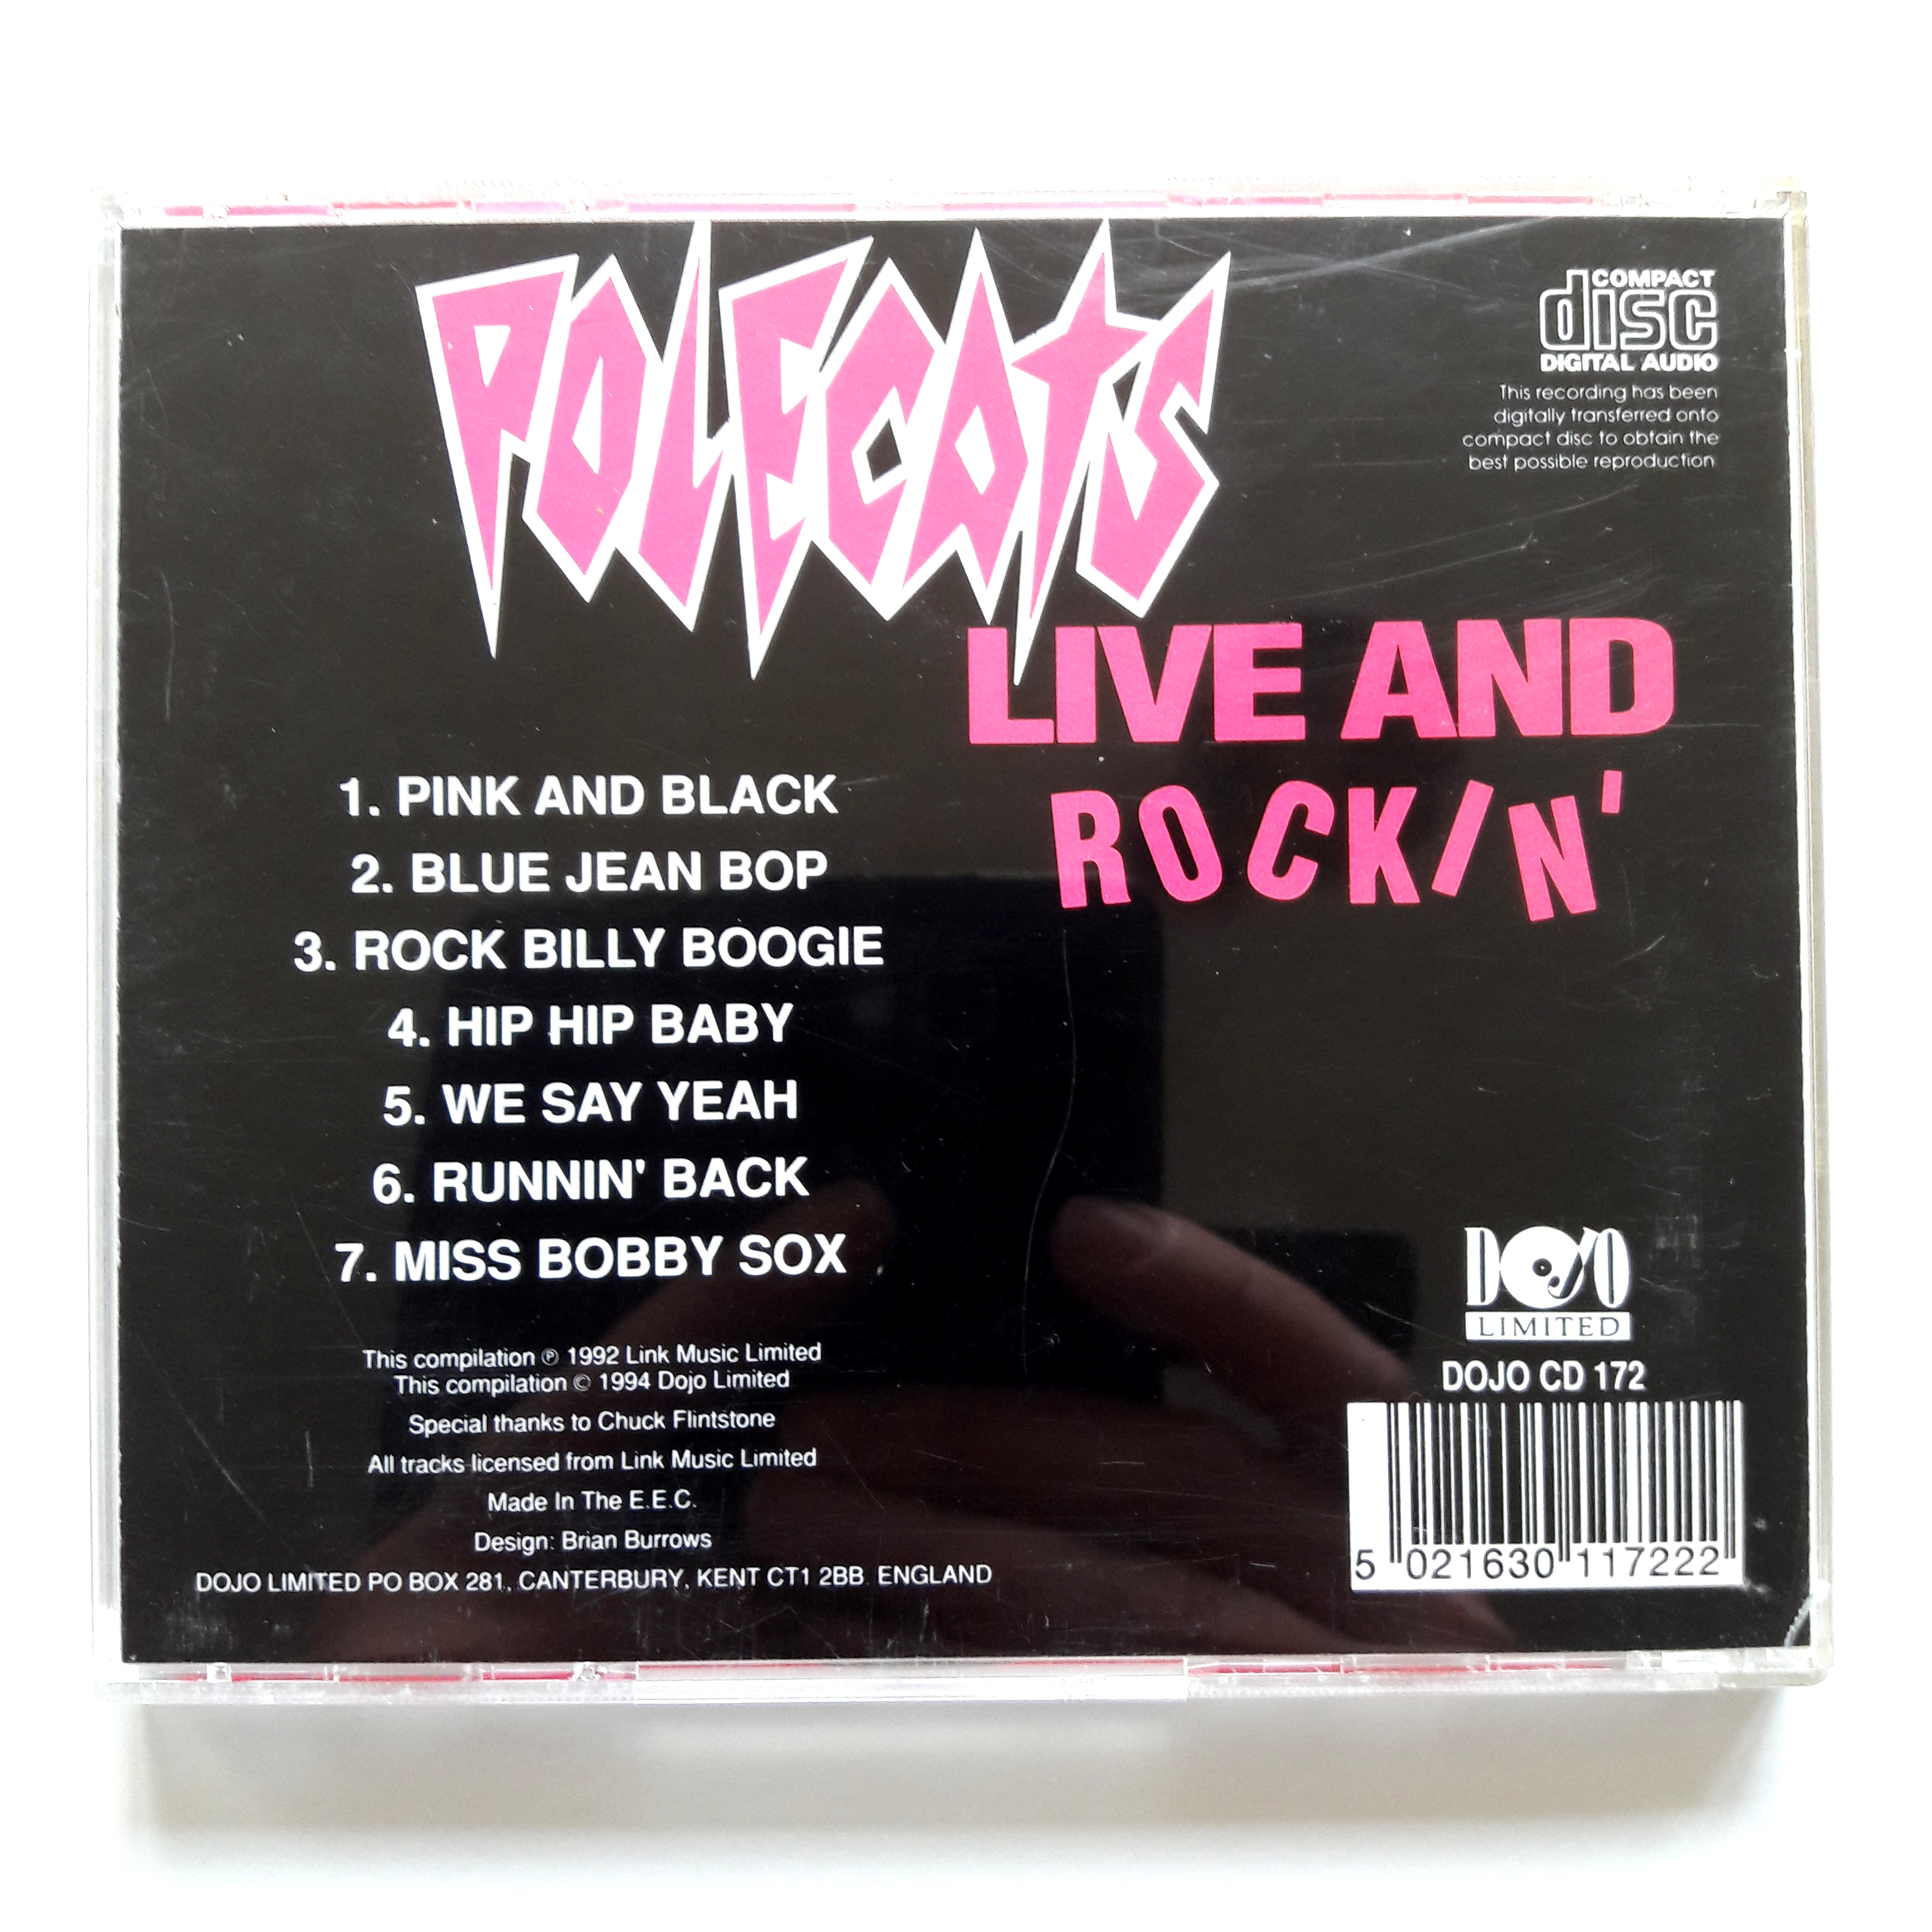 Polecats - Live and Rockin'